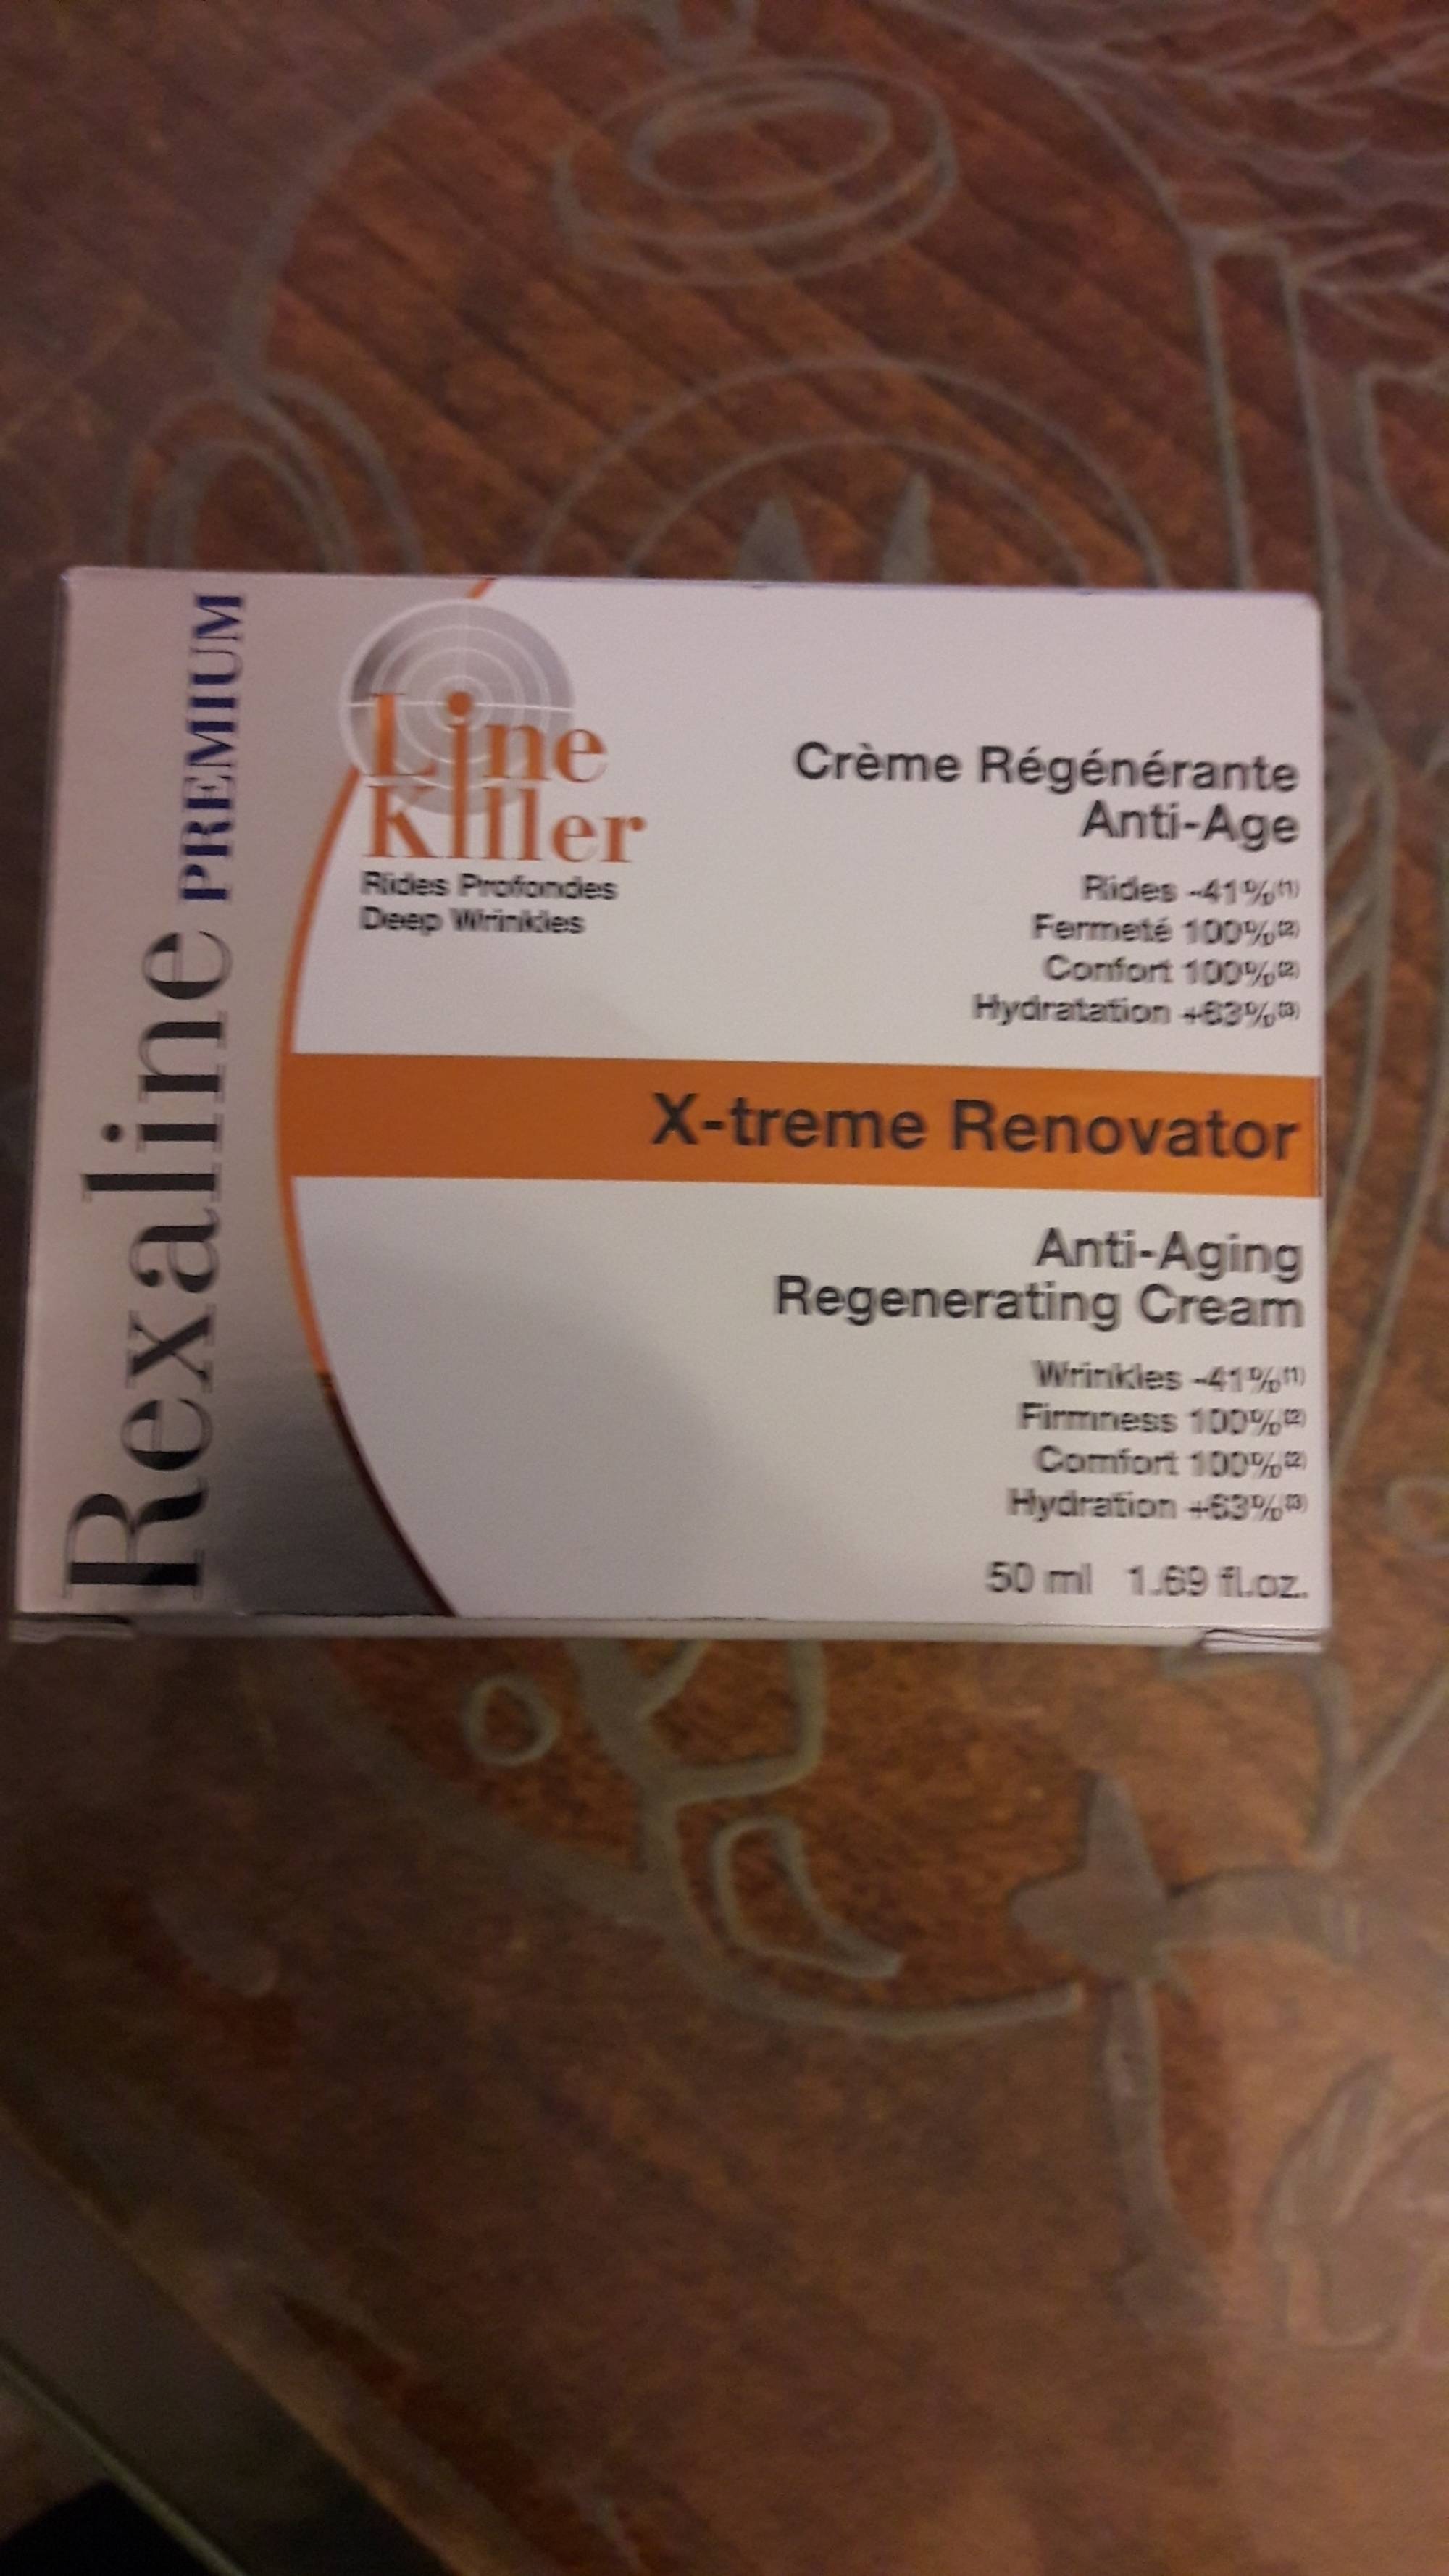 REXALINE - Premium line killer - Crème régénérante anti-âge x-treme renovator